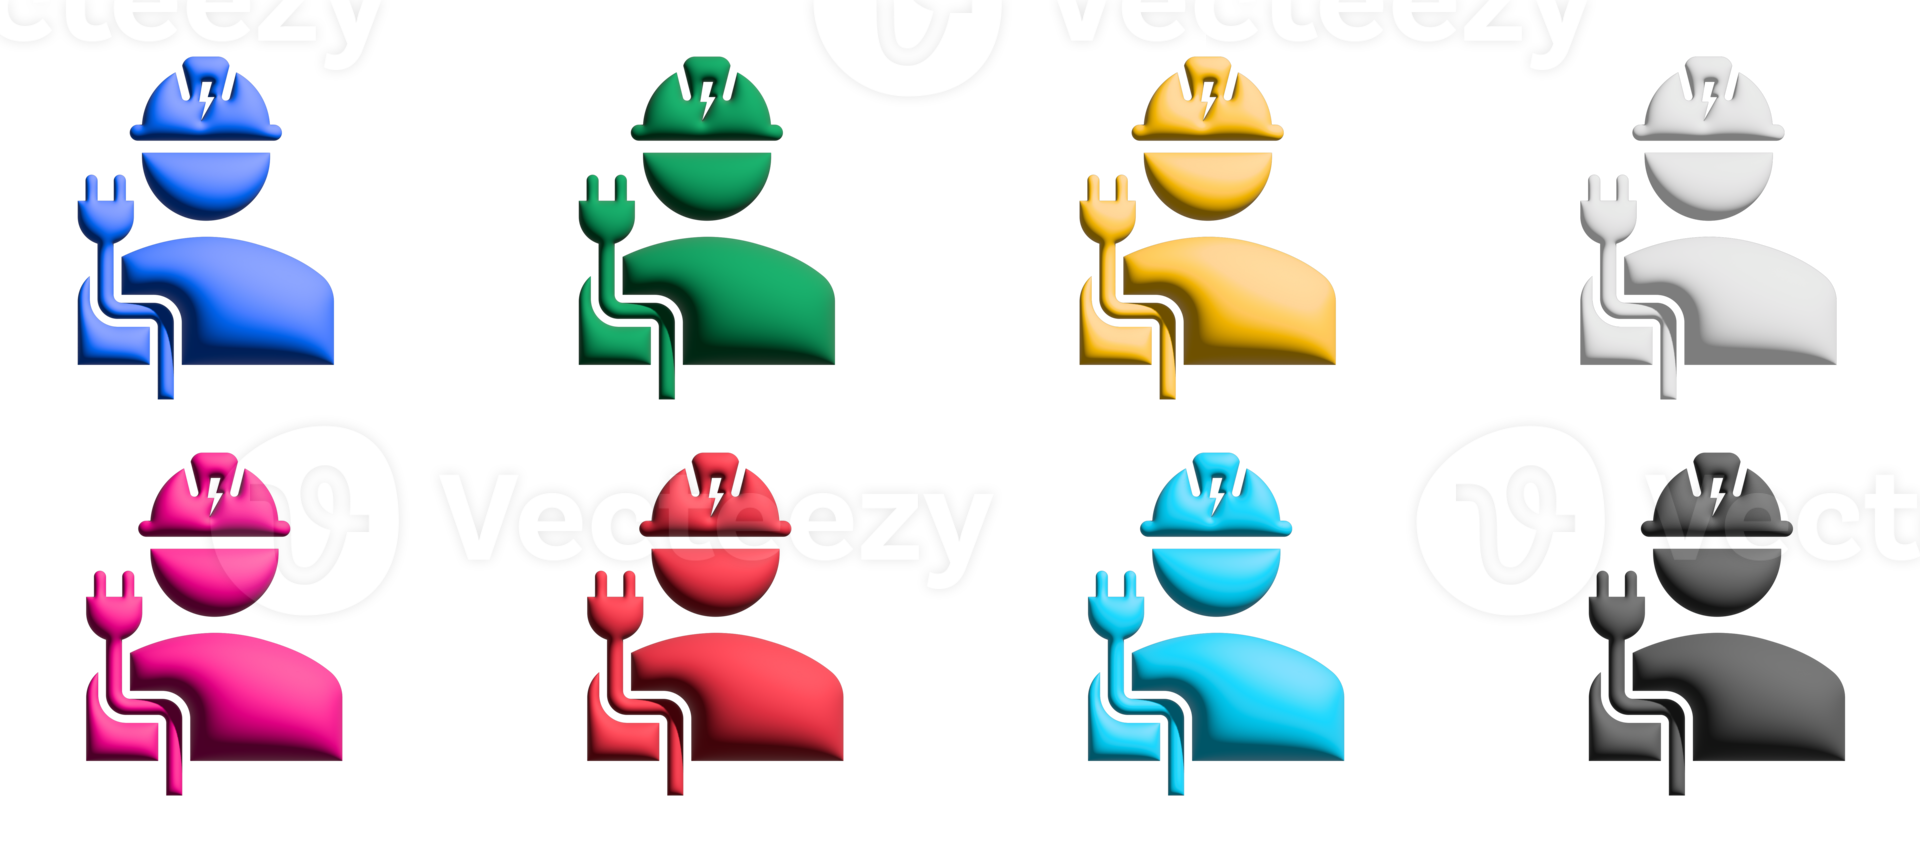 Electrician 3d icon set, colorful symbols graphic elements png